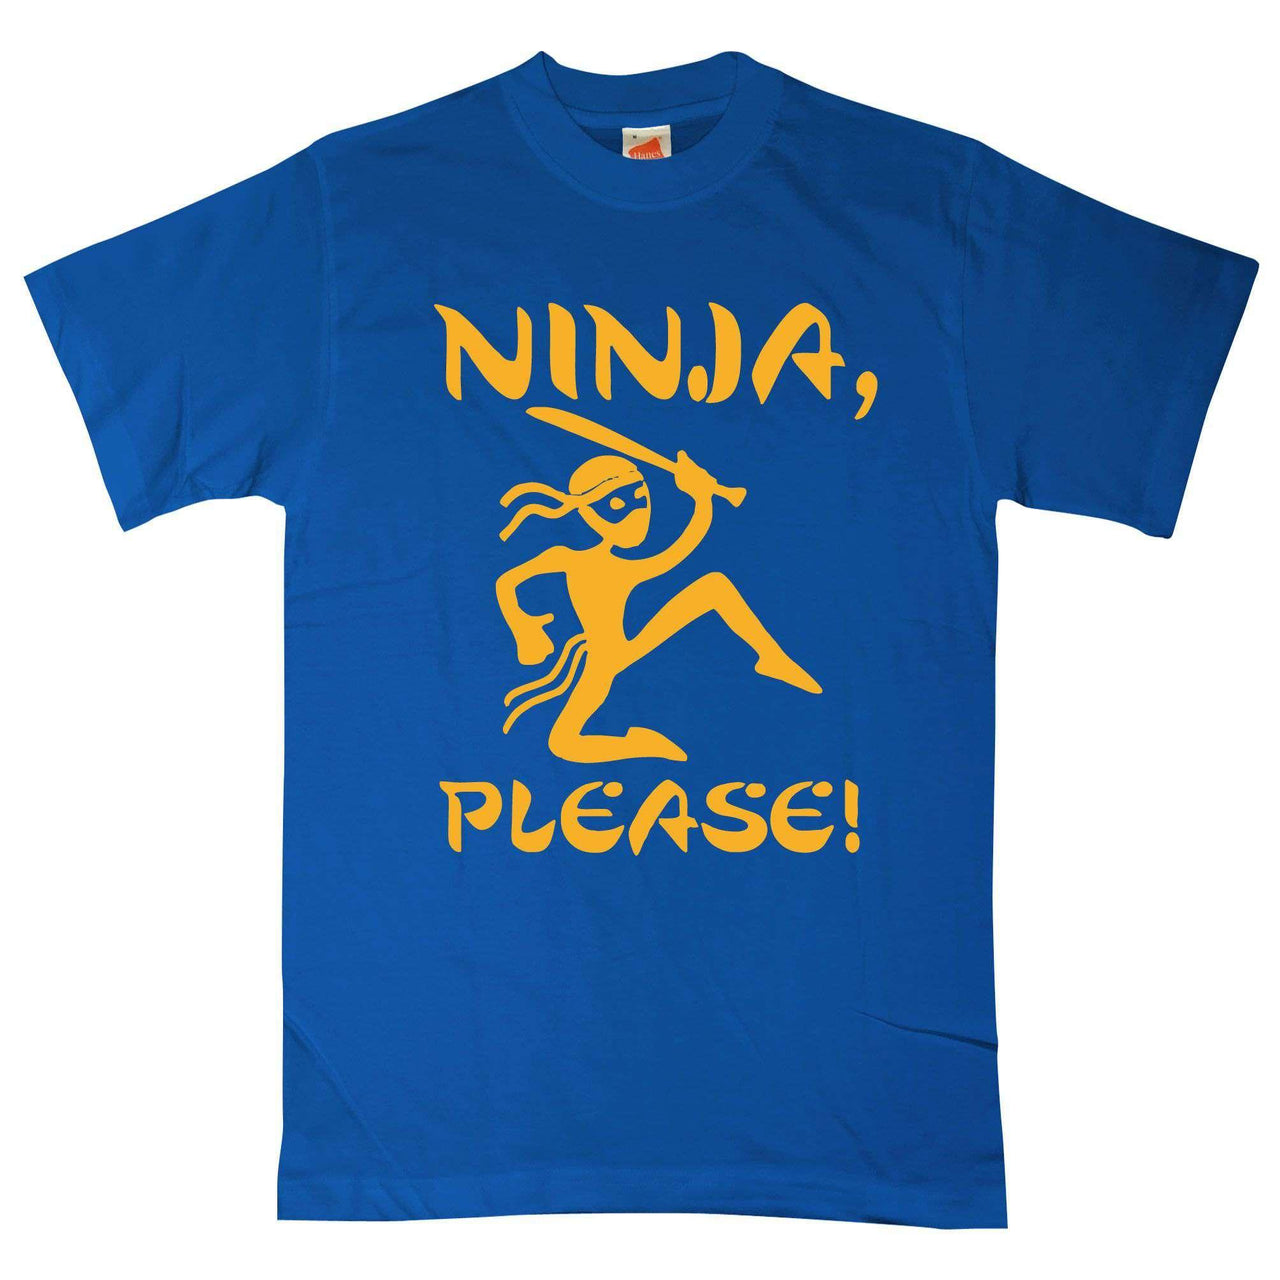 Ninja Please! Graphic T-Shirt For Men 8Ball